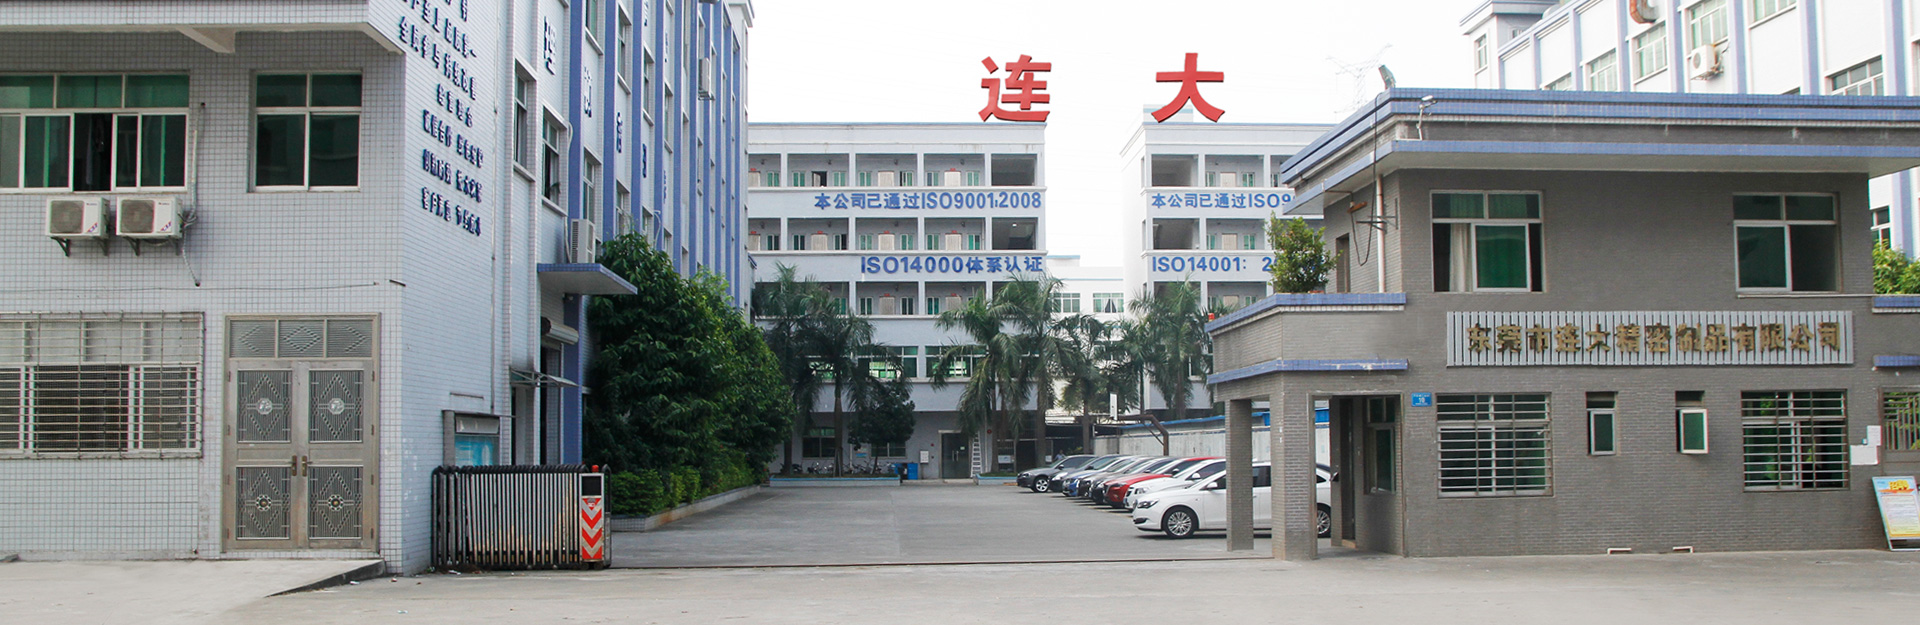 Welcome to Dongguan Lianda Precision Products Co. Ltd